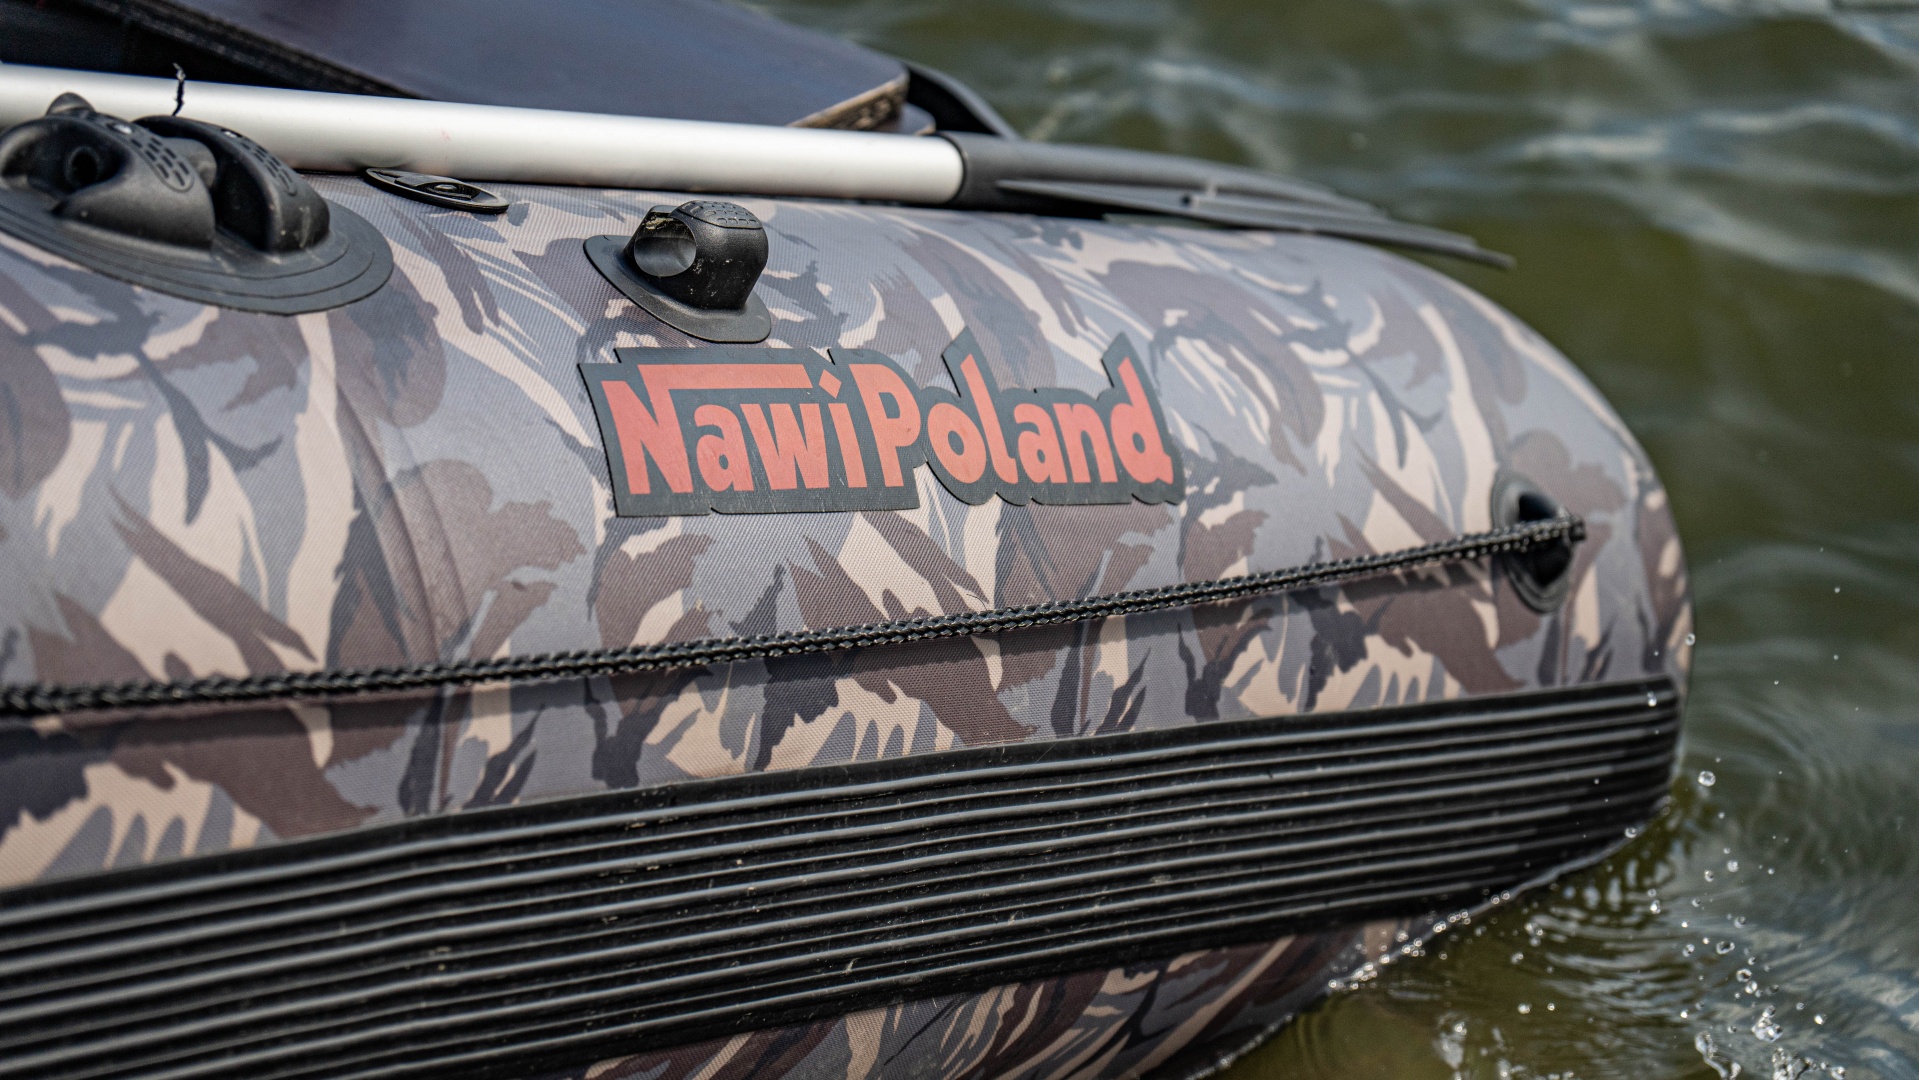 NawiPoland CAT 400 Inflatable Boat - Catamarano